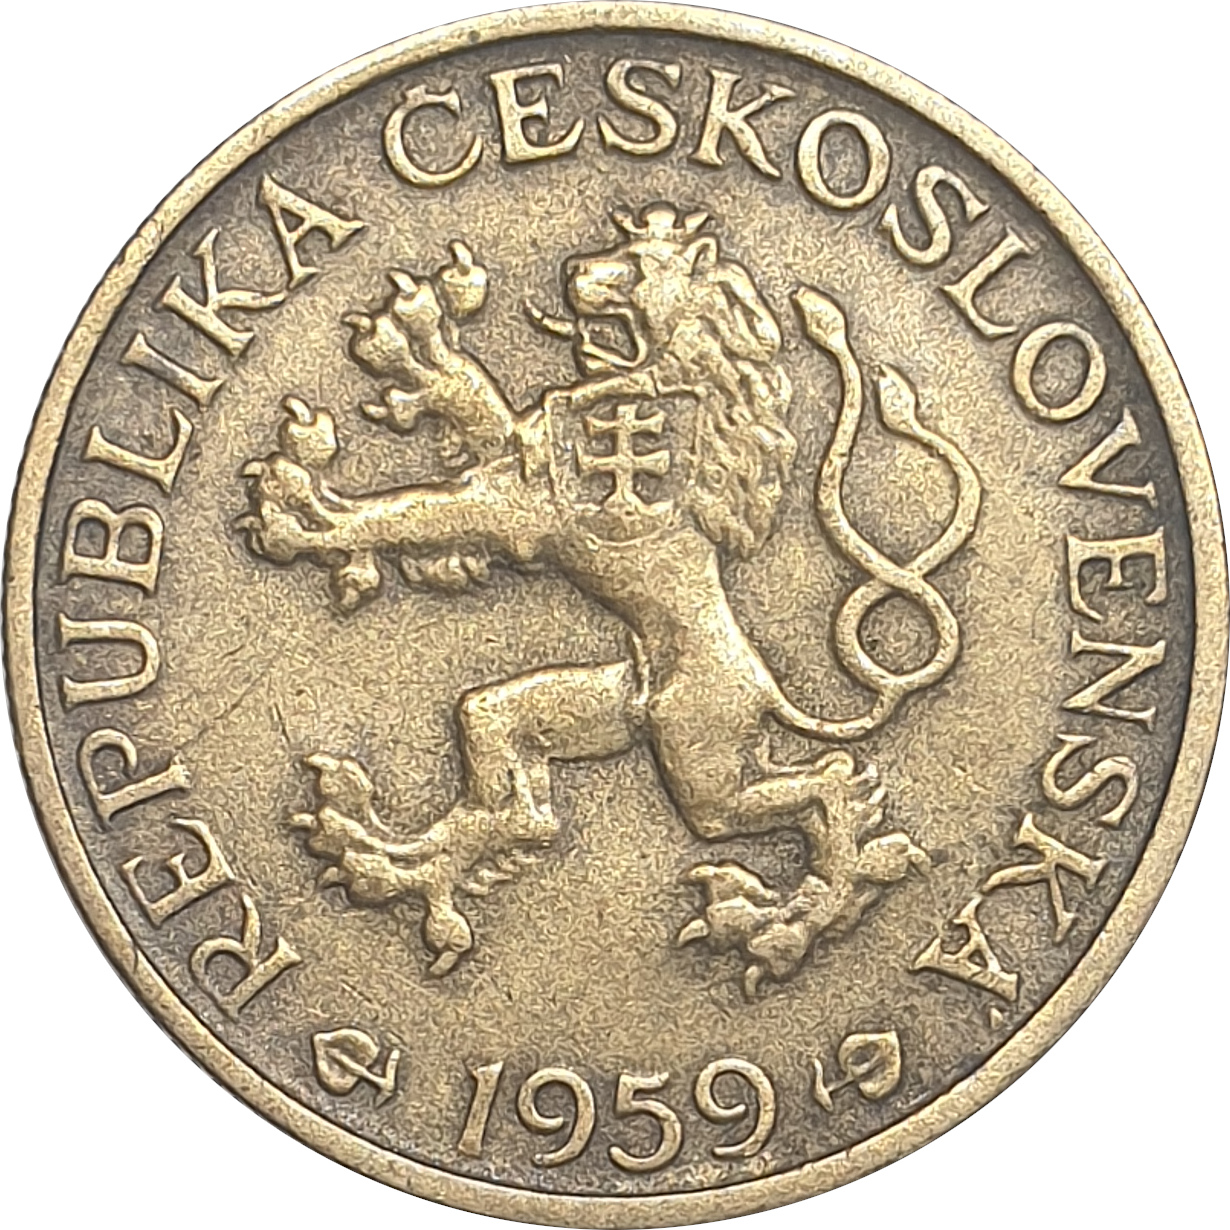 1 koruna - Free Heraldic Lion